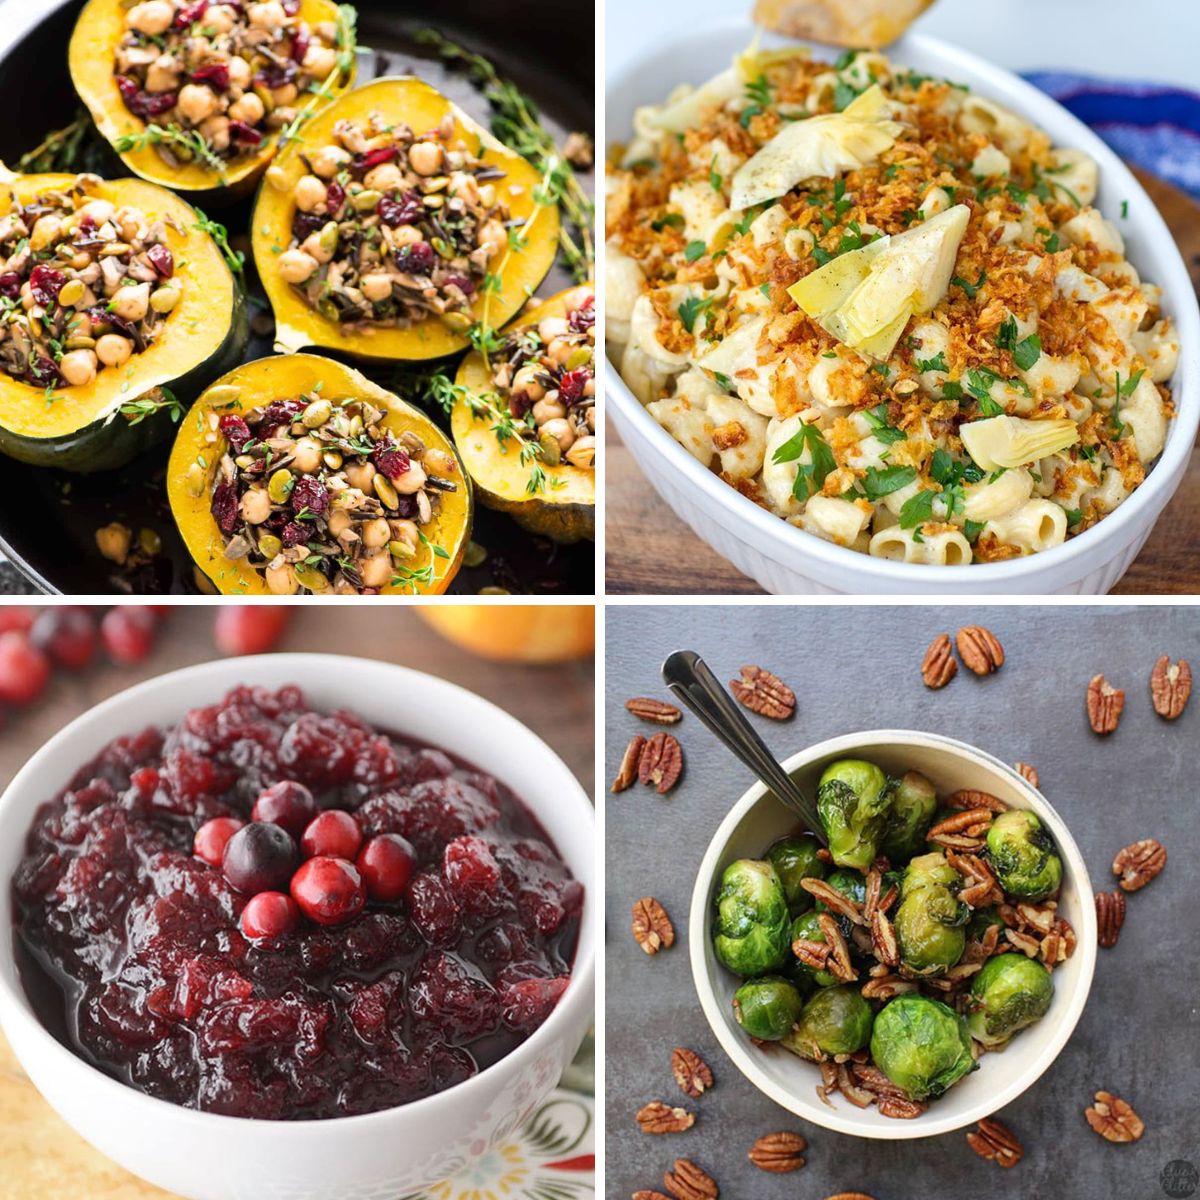 Instant Pot Vegan Thanksgiving Side Recipes